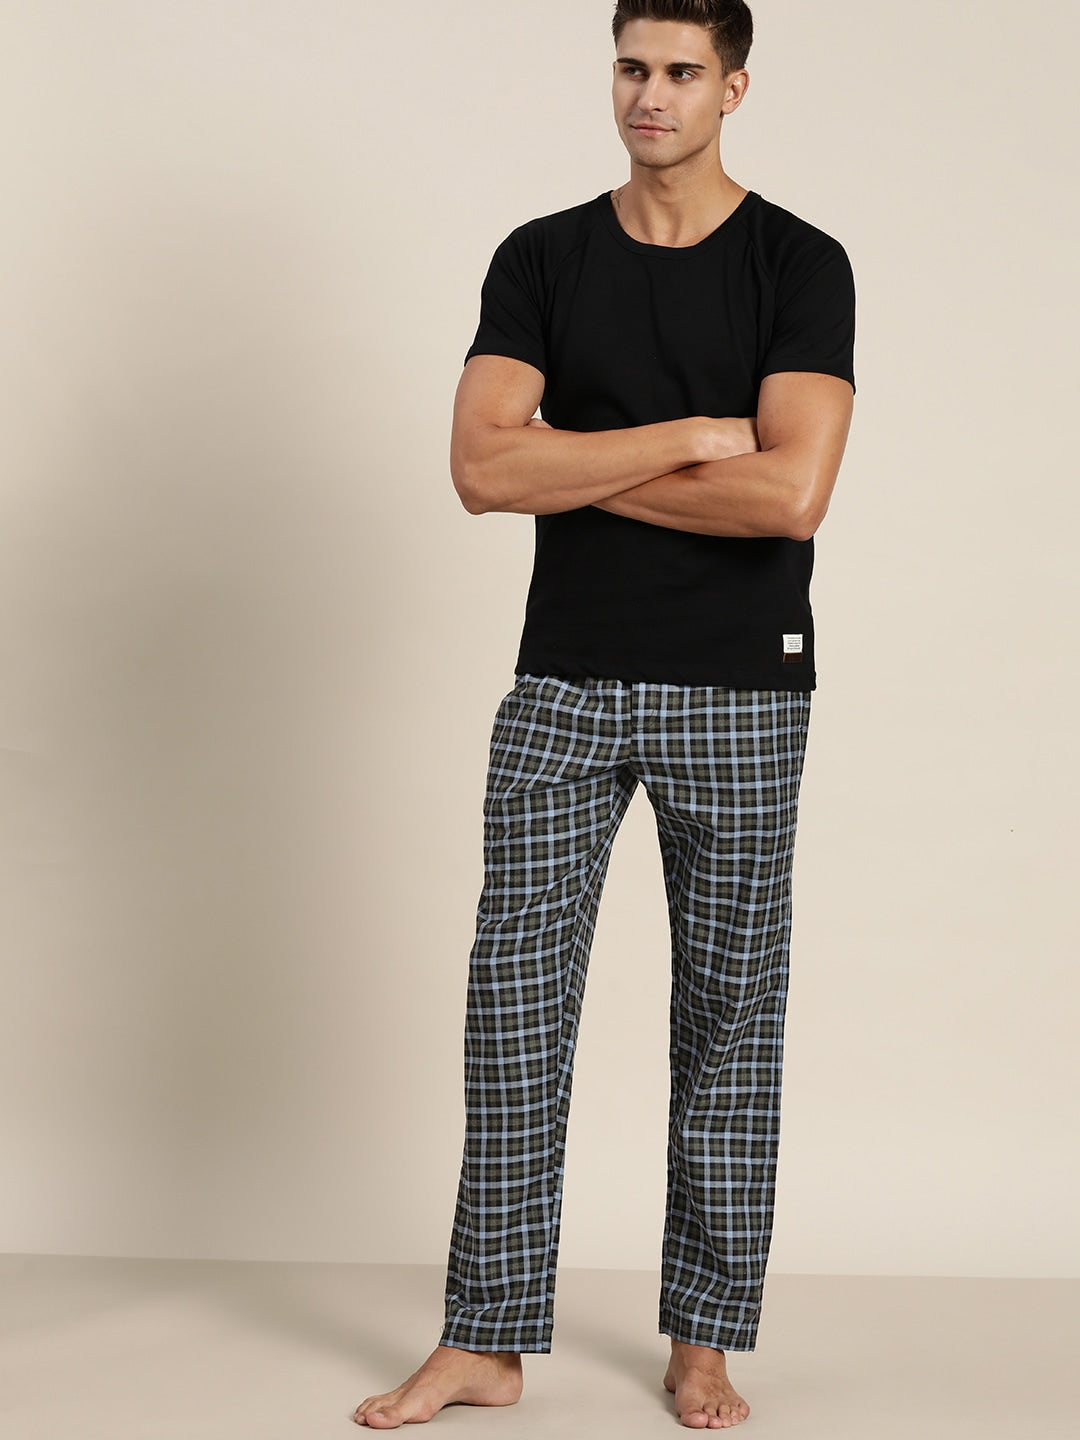 Mancrew Slim Fit Formal Pant for men - Formal Trousers - Light Grey, Black  Combo (Pack Of 2)